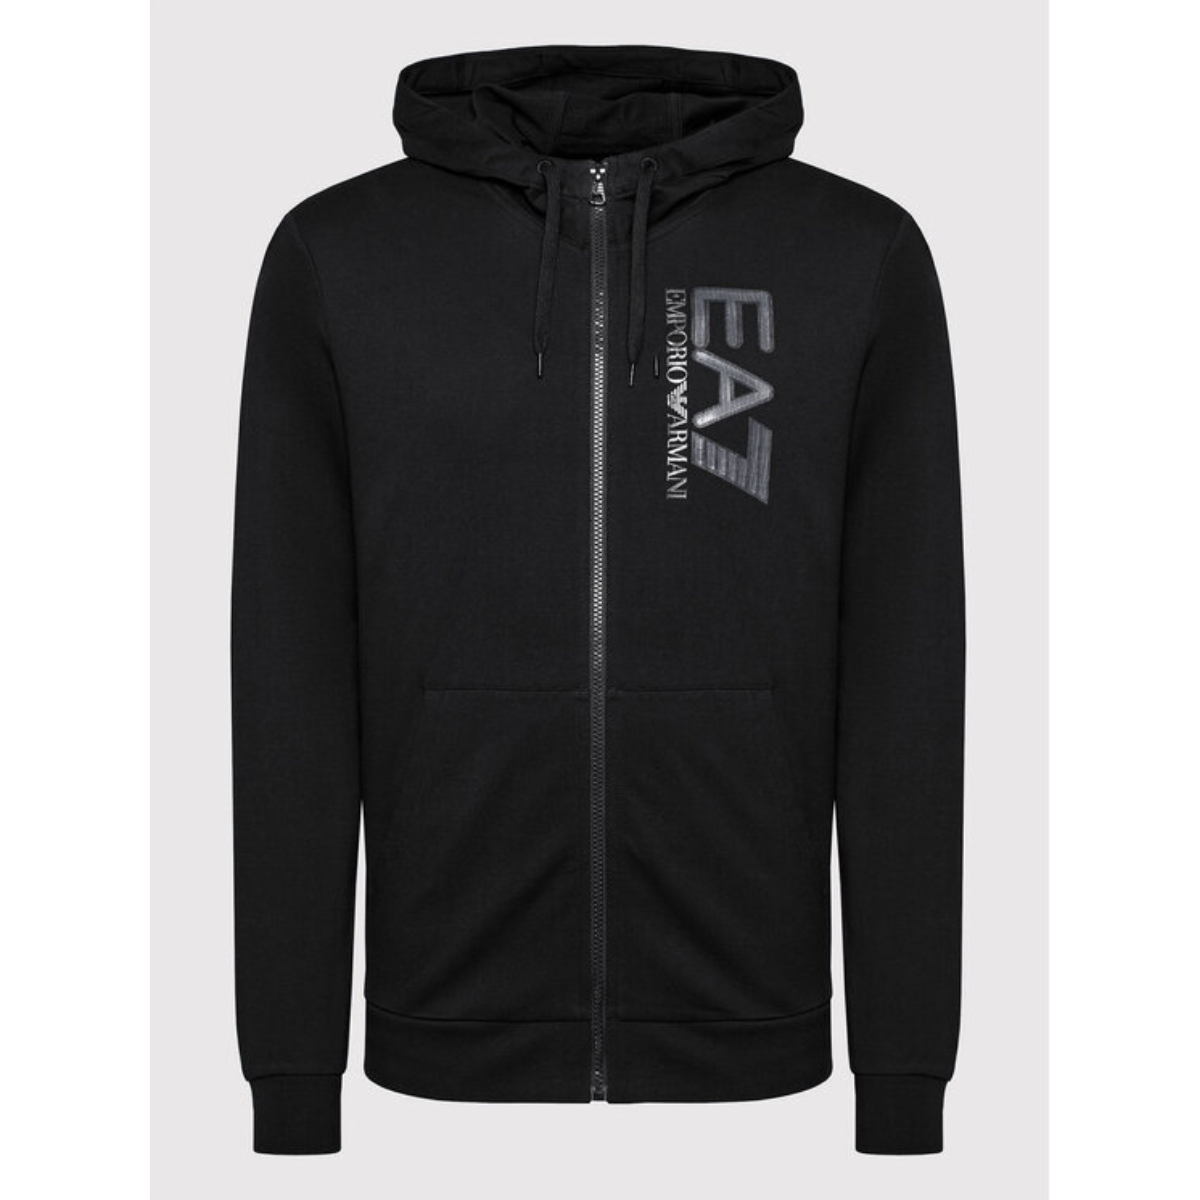 EA7 Emporio Armani - Sweatshirt - Black